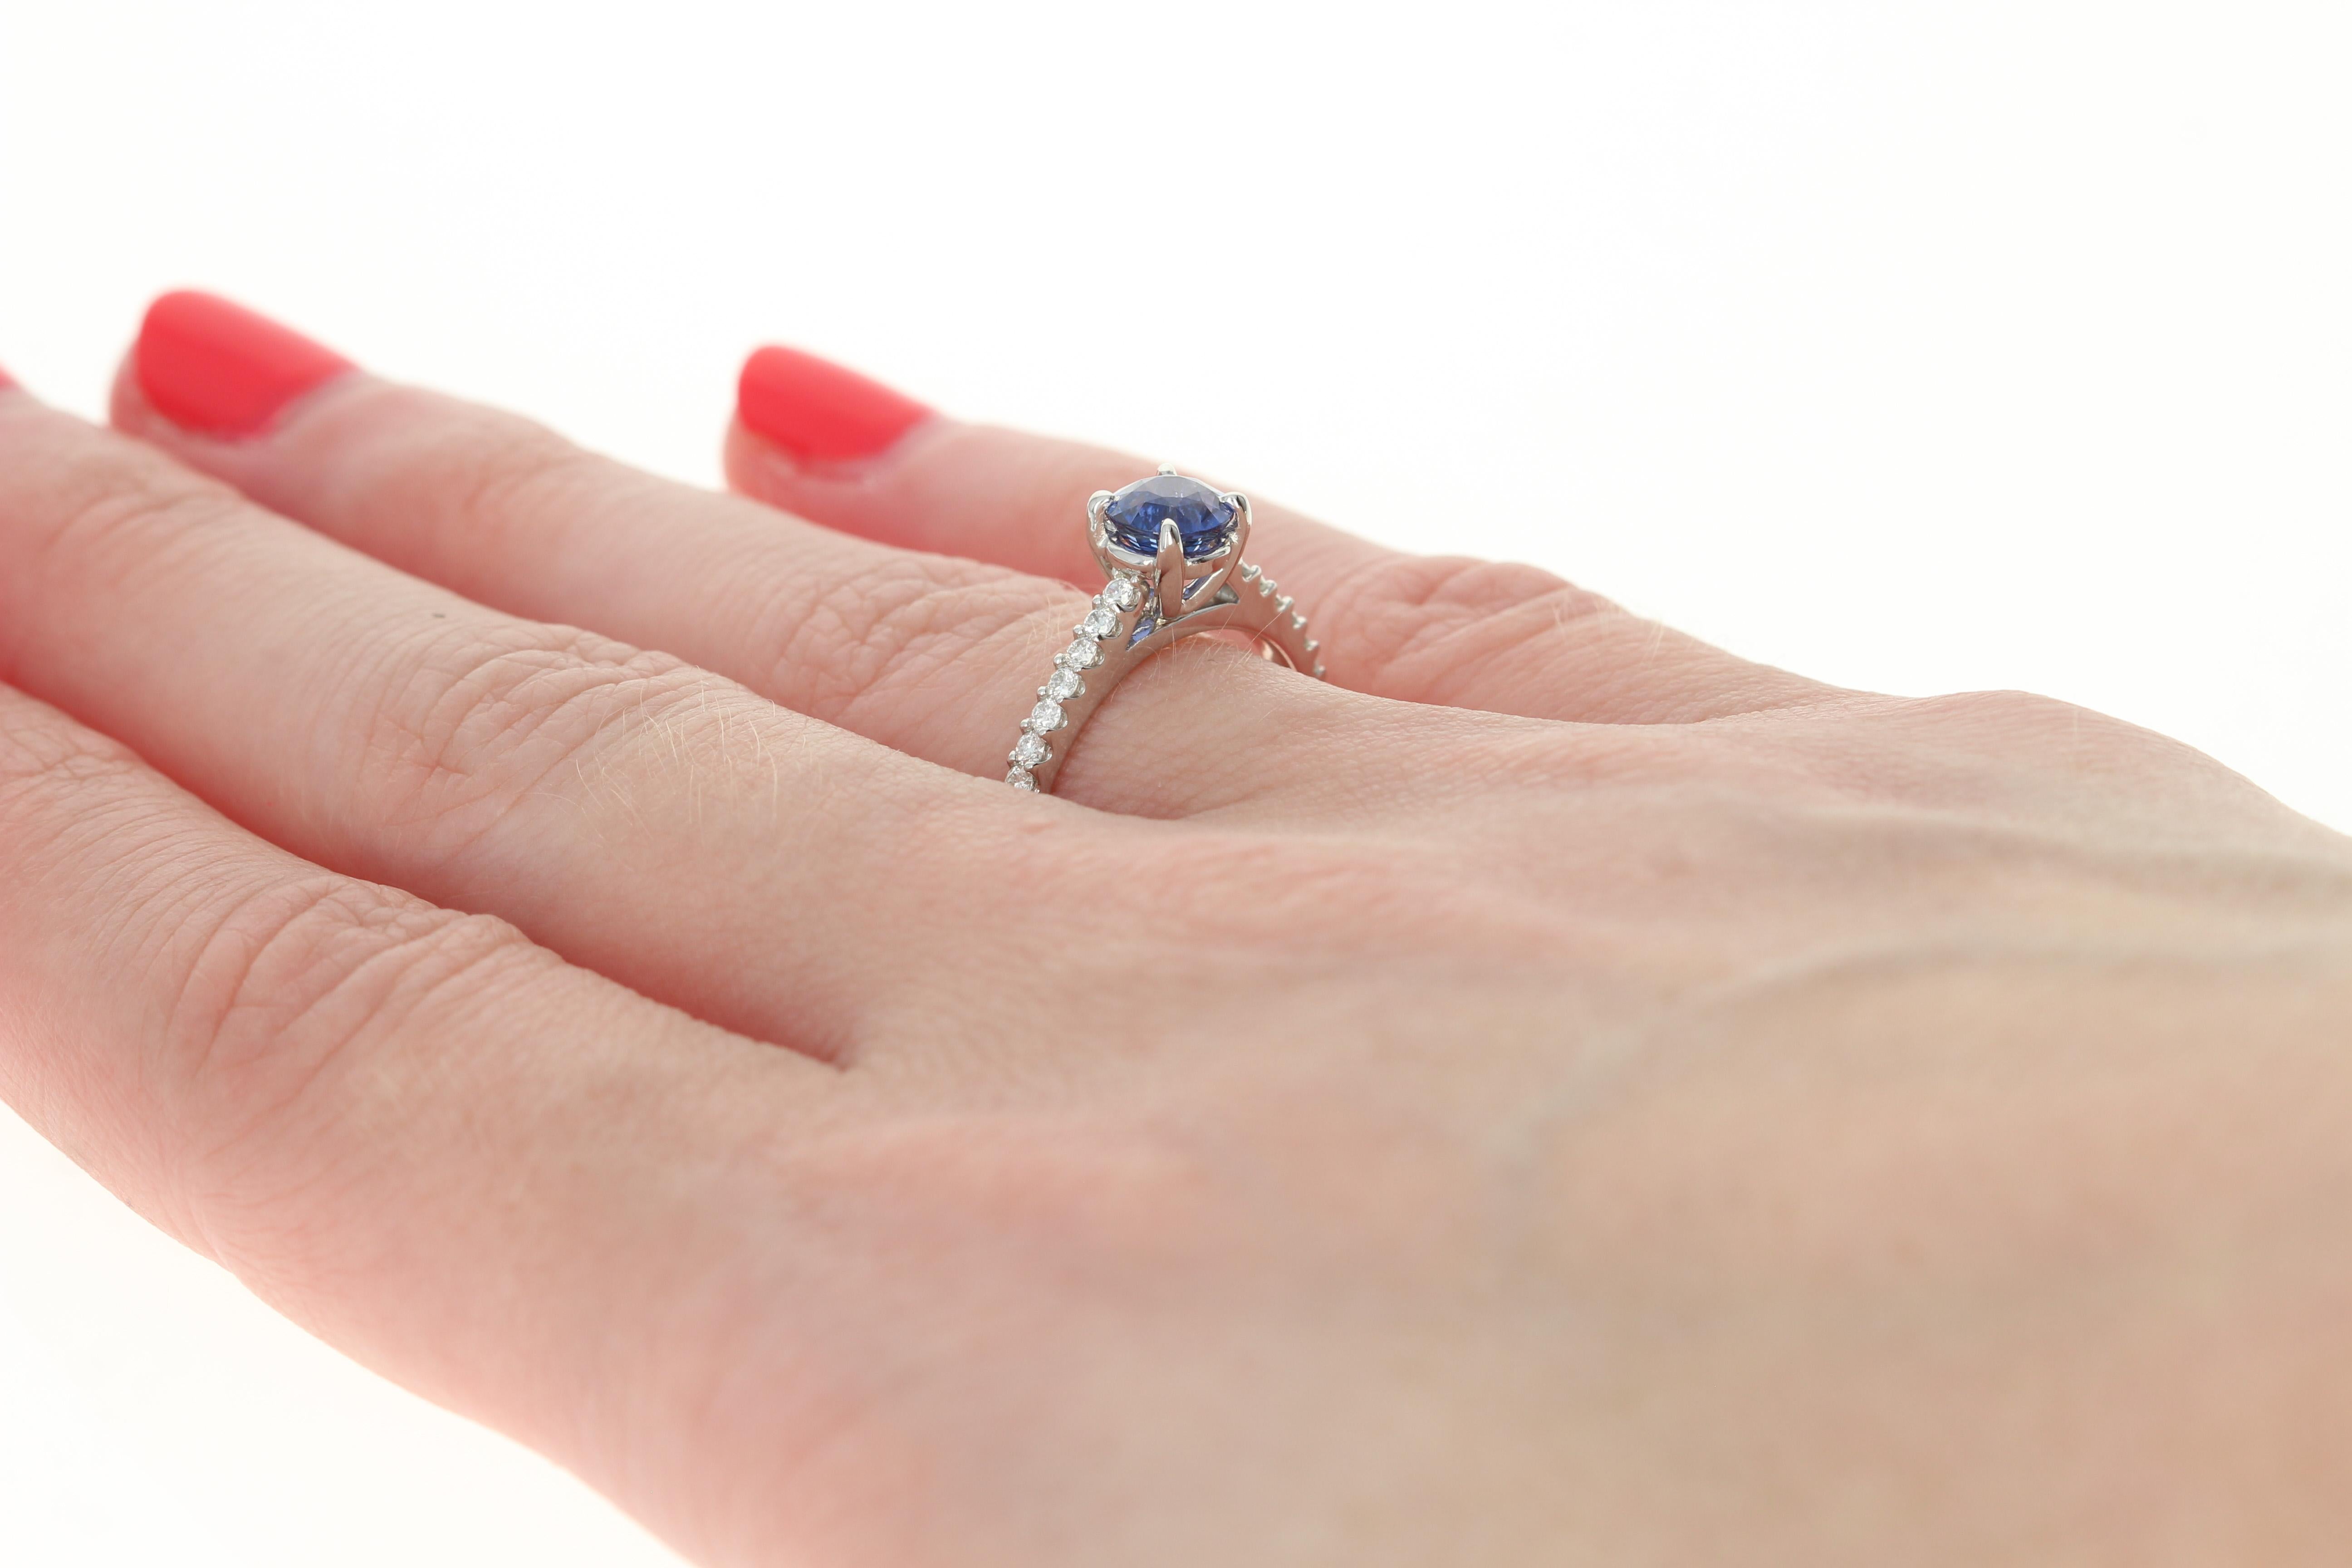 Women's Sapphire and Diamond Engagement Ring, 950 Platinum Round Cut 1.12 Carat